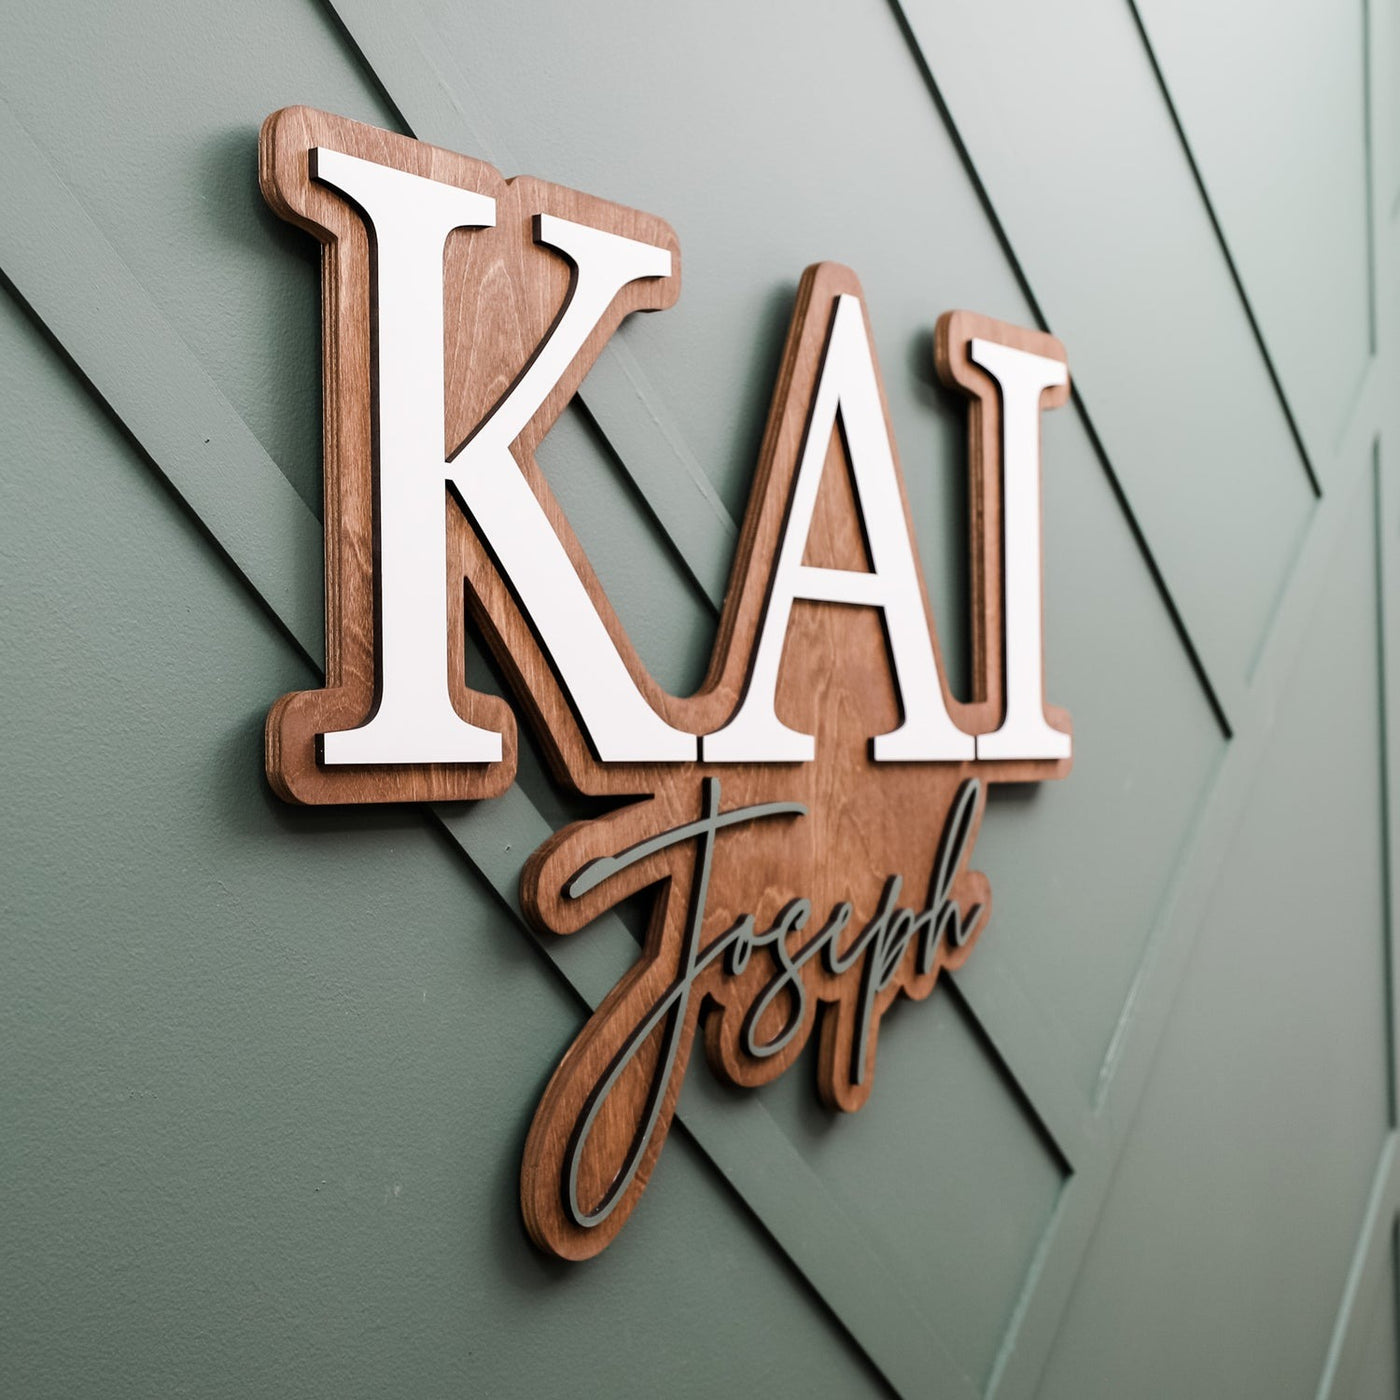 Kai Joseph Outline Design, Custom Name Sign for Nursery